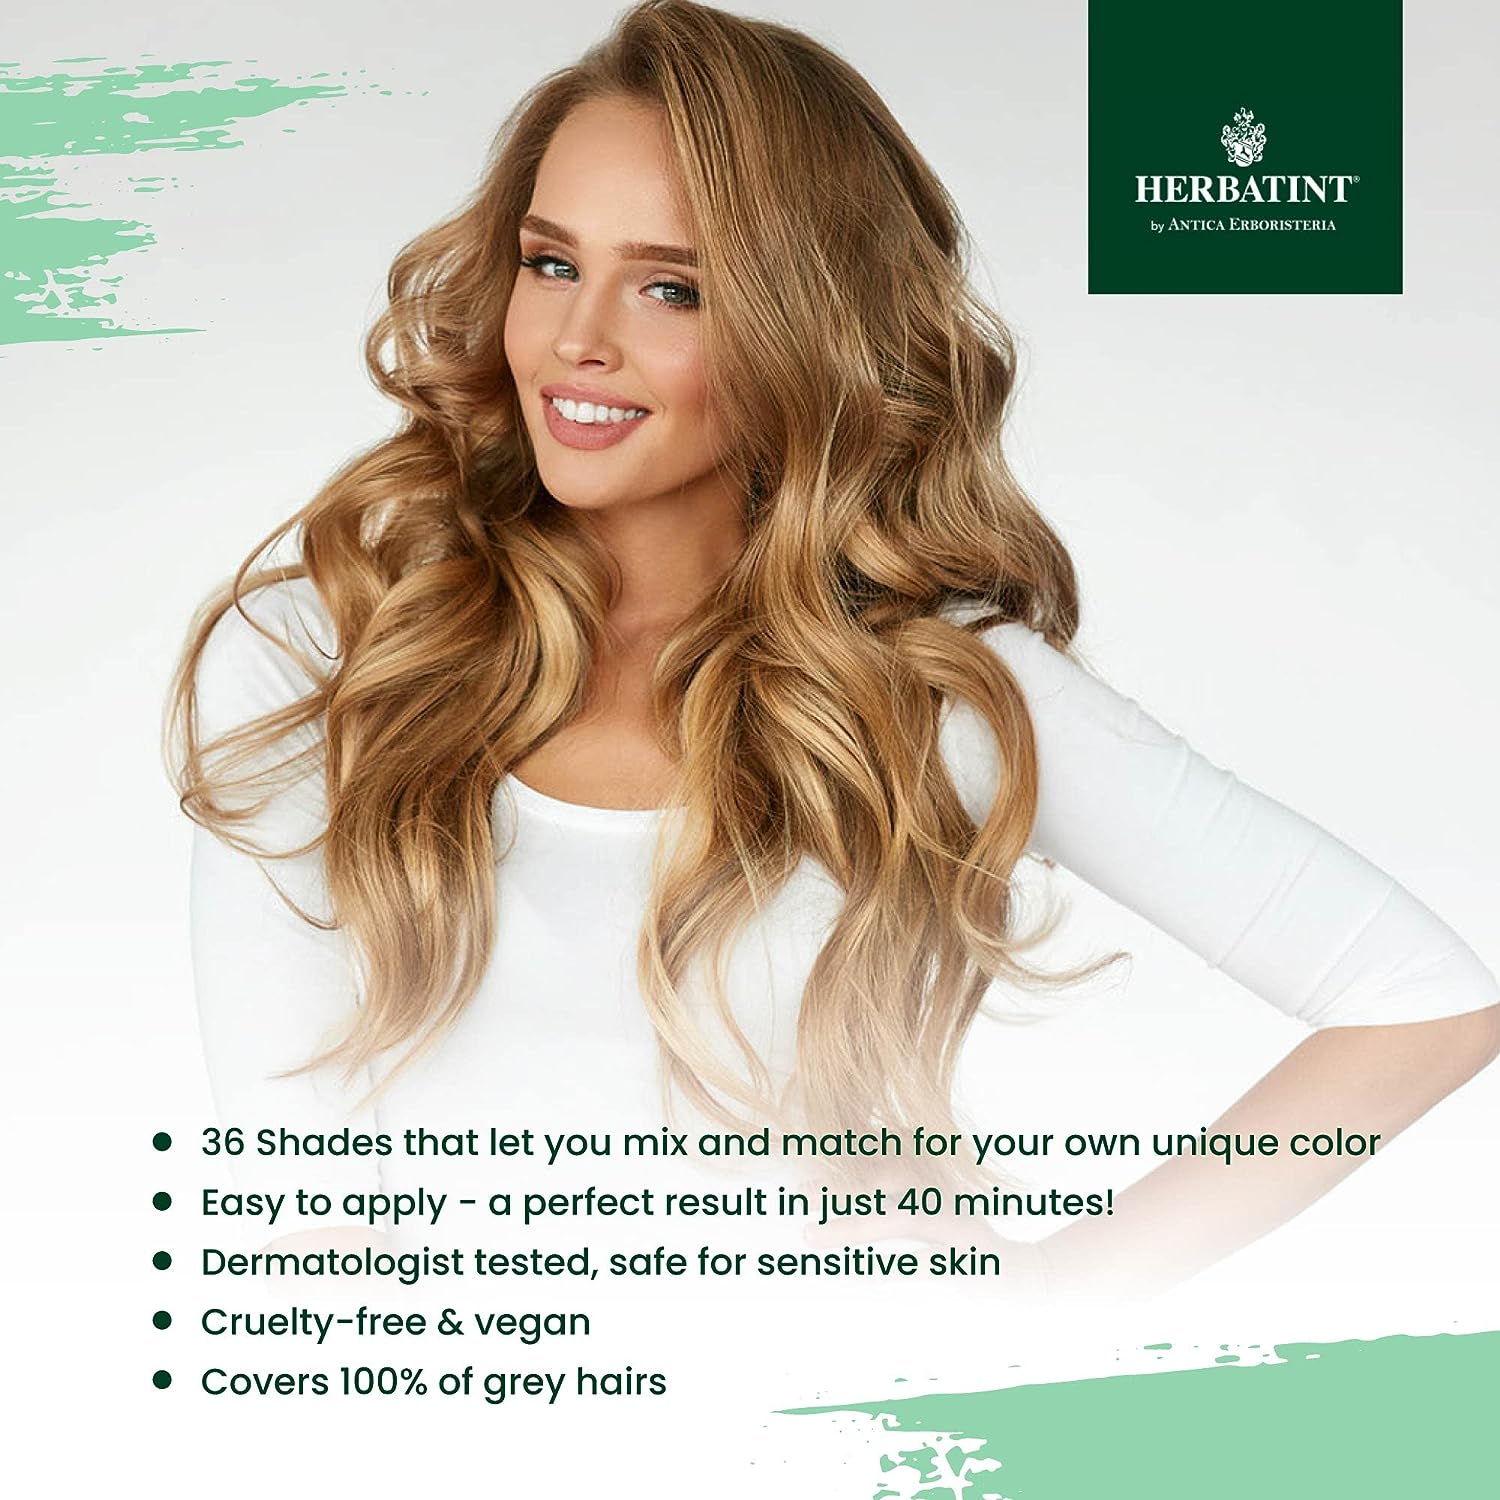 Herbatint Gluten Free Permanent Haircolor Gel 7N Blonde - Natural and Helathy Shine Vibrant, Long-Lasting Color - Hatke